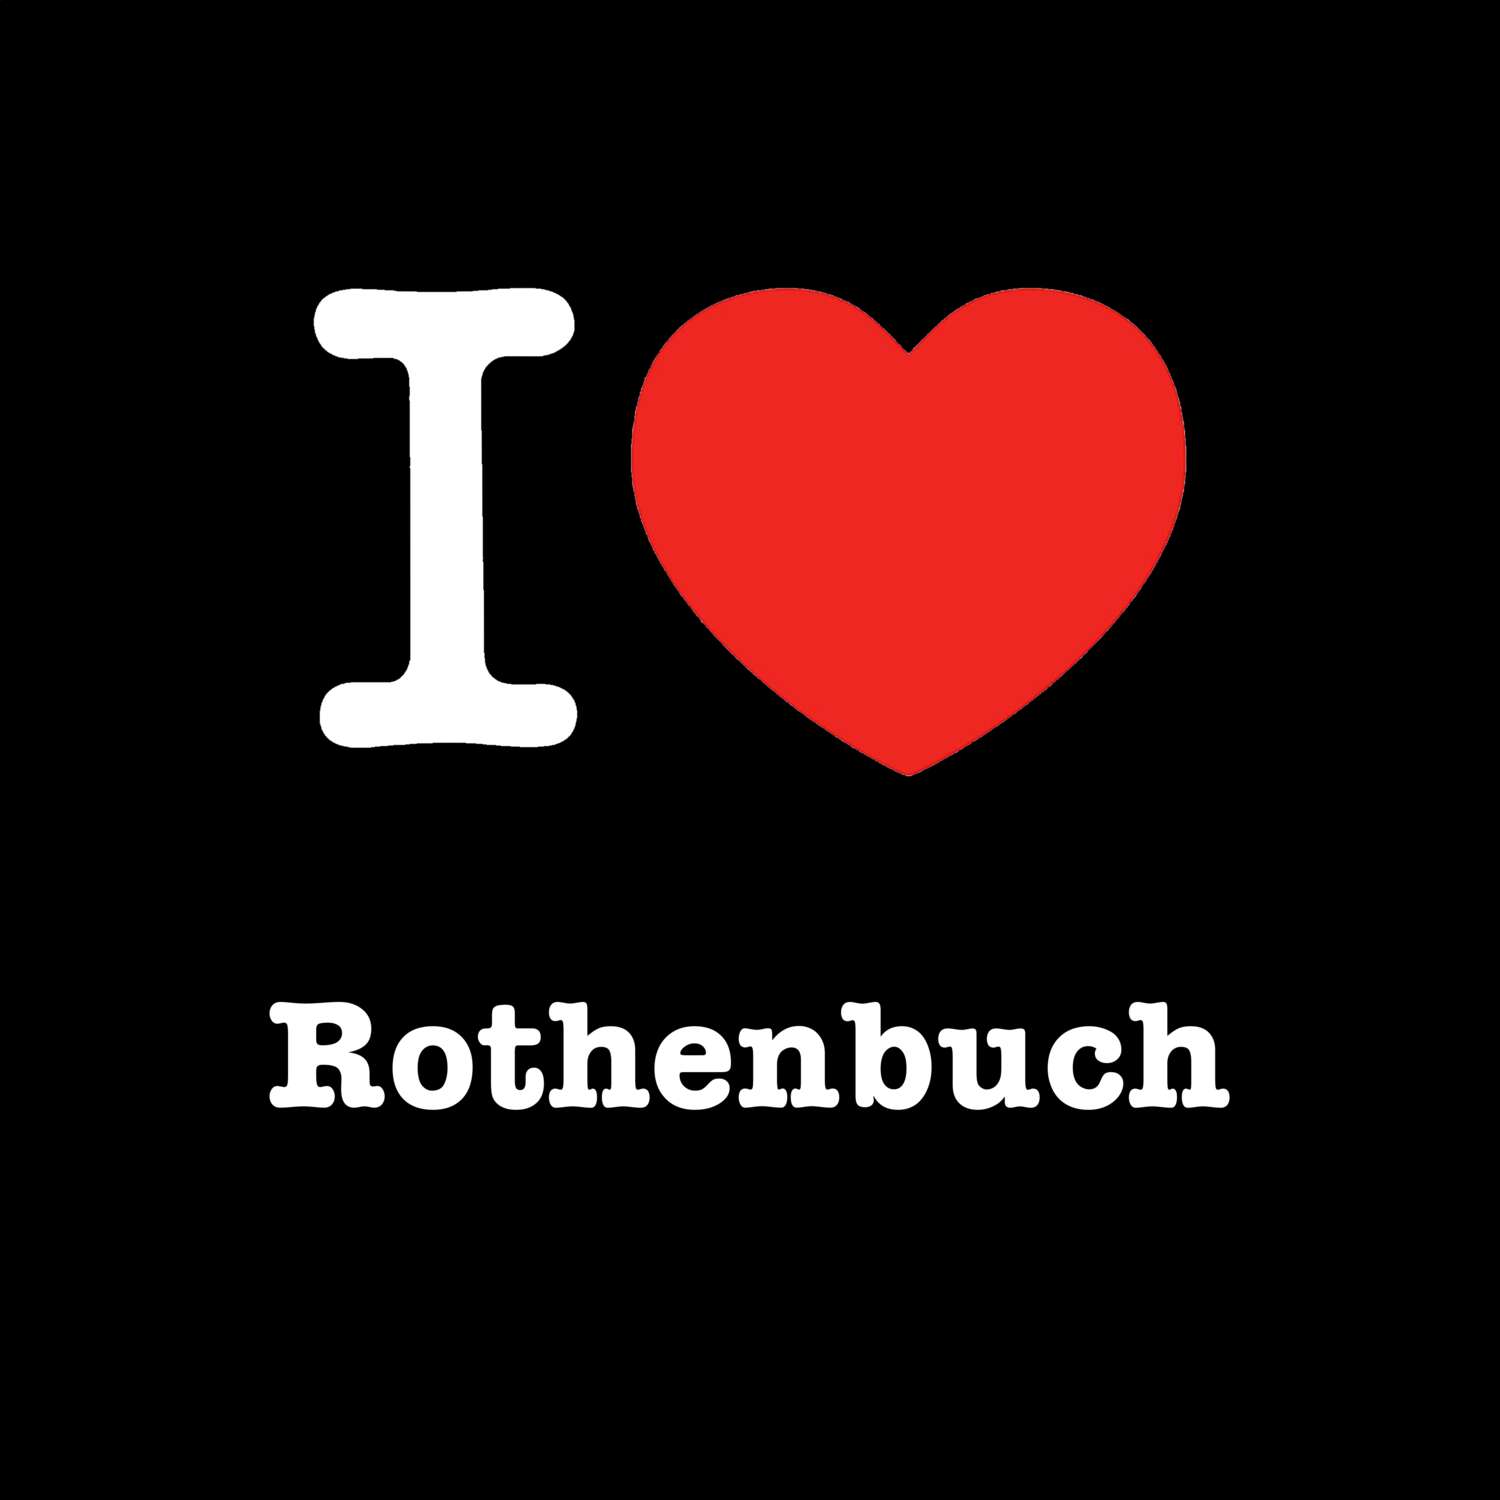 Rothenbuch T-Shirt »I love«